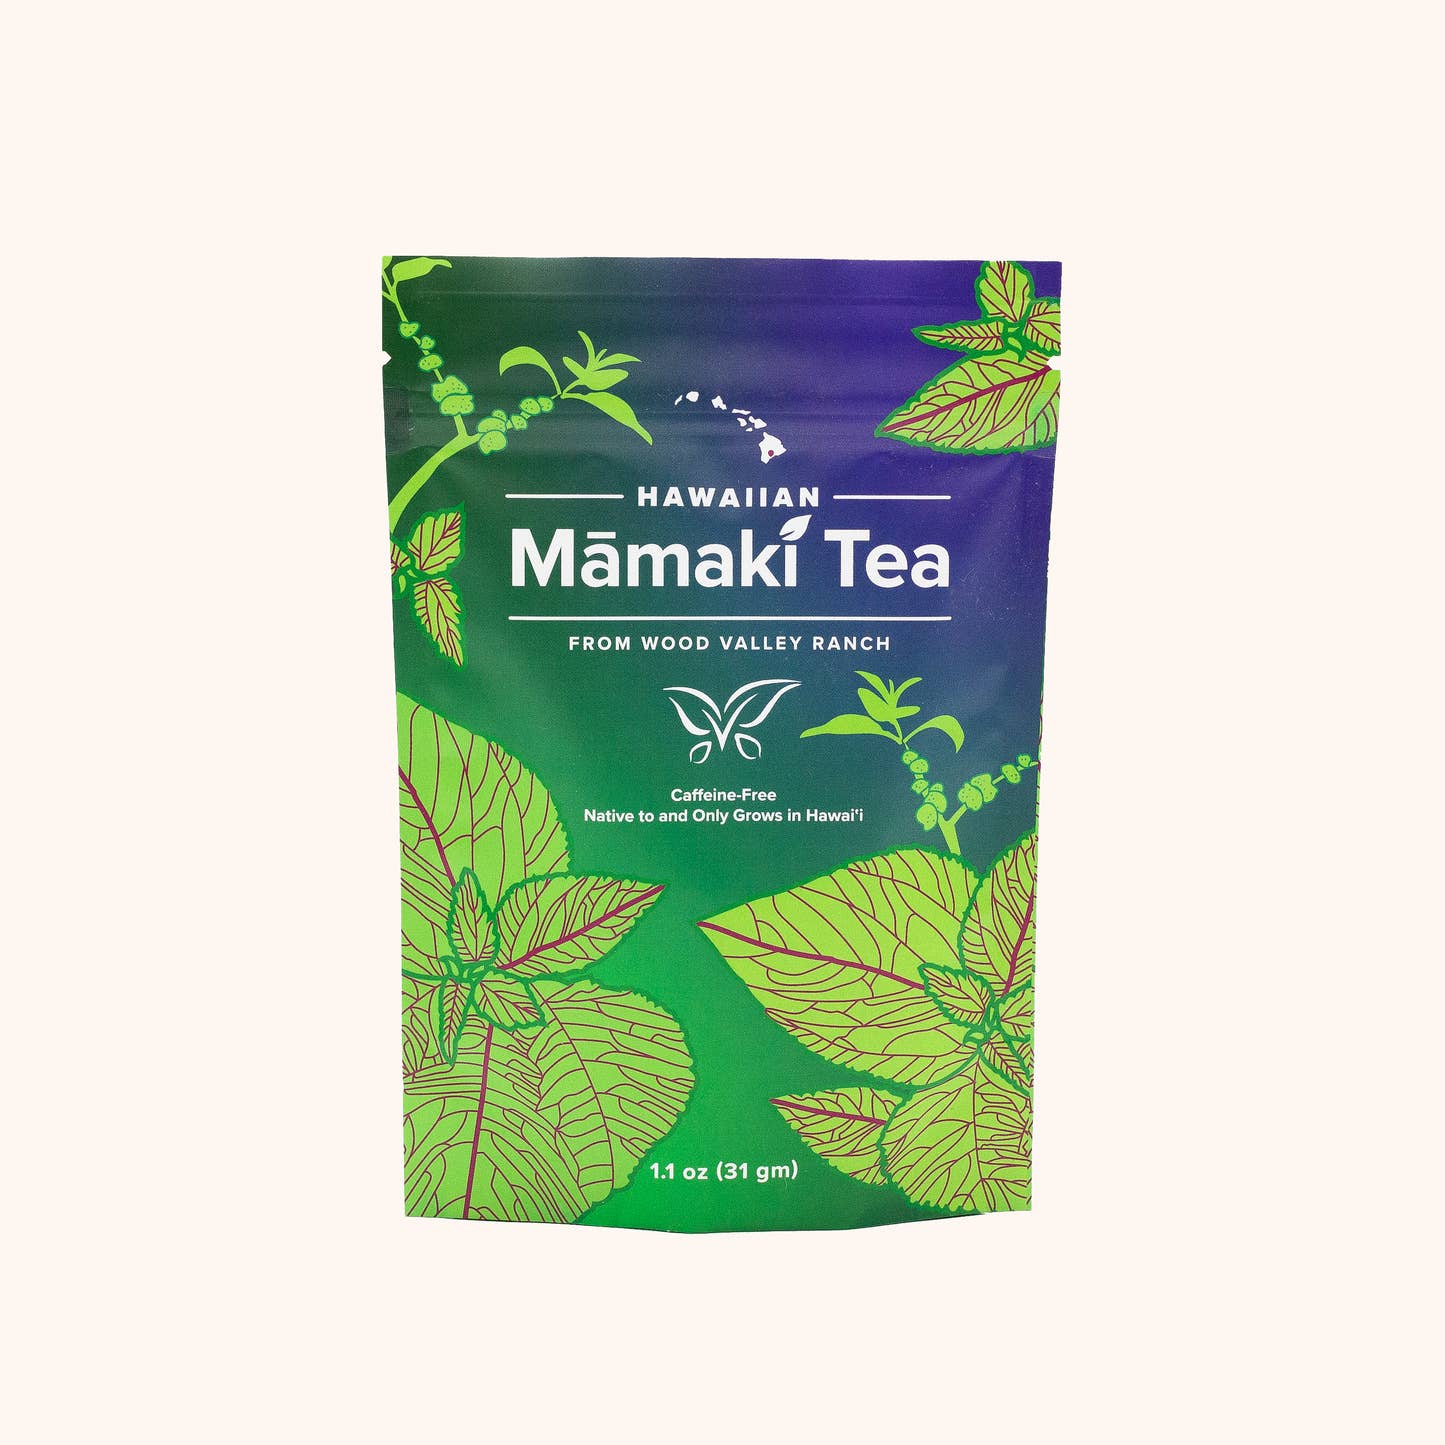 Mamaki Tea